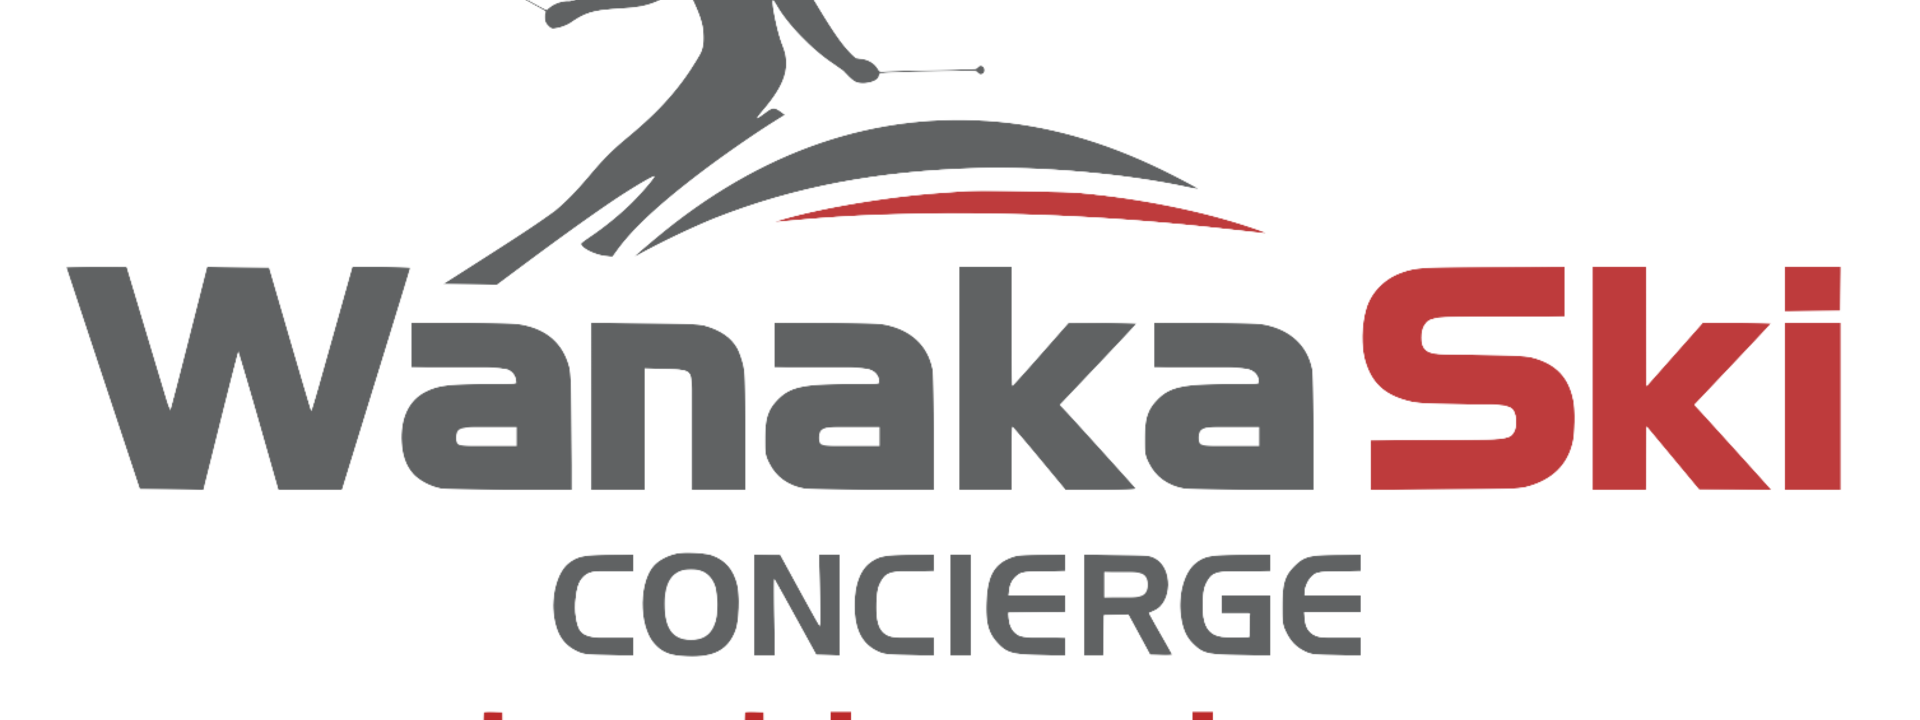 wanaka-ski-conceirge-no-background.png